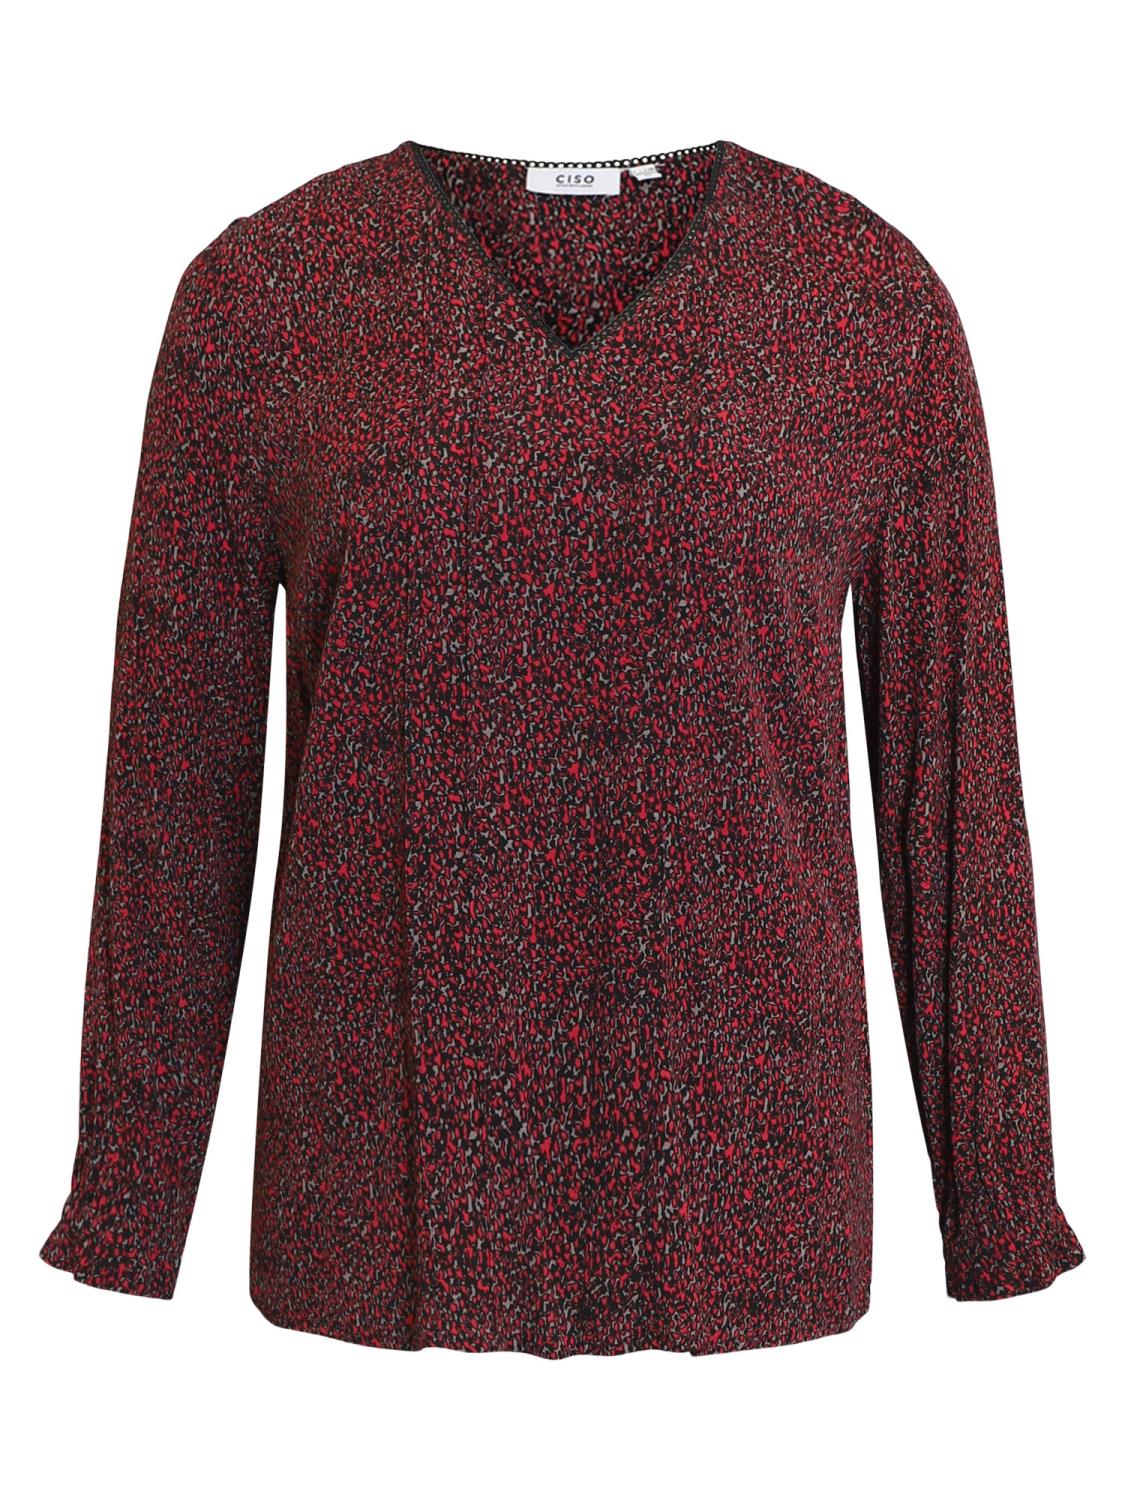 Ciso mønstret bluse, rød/sort